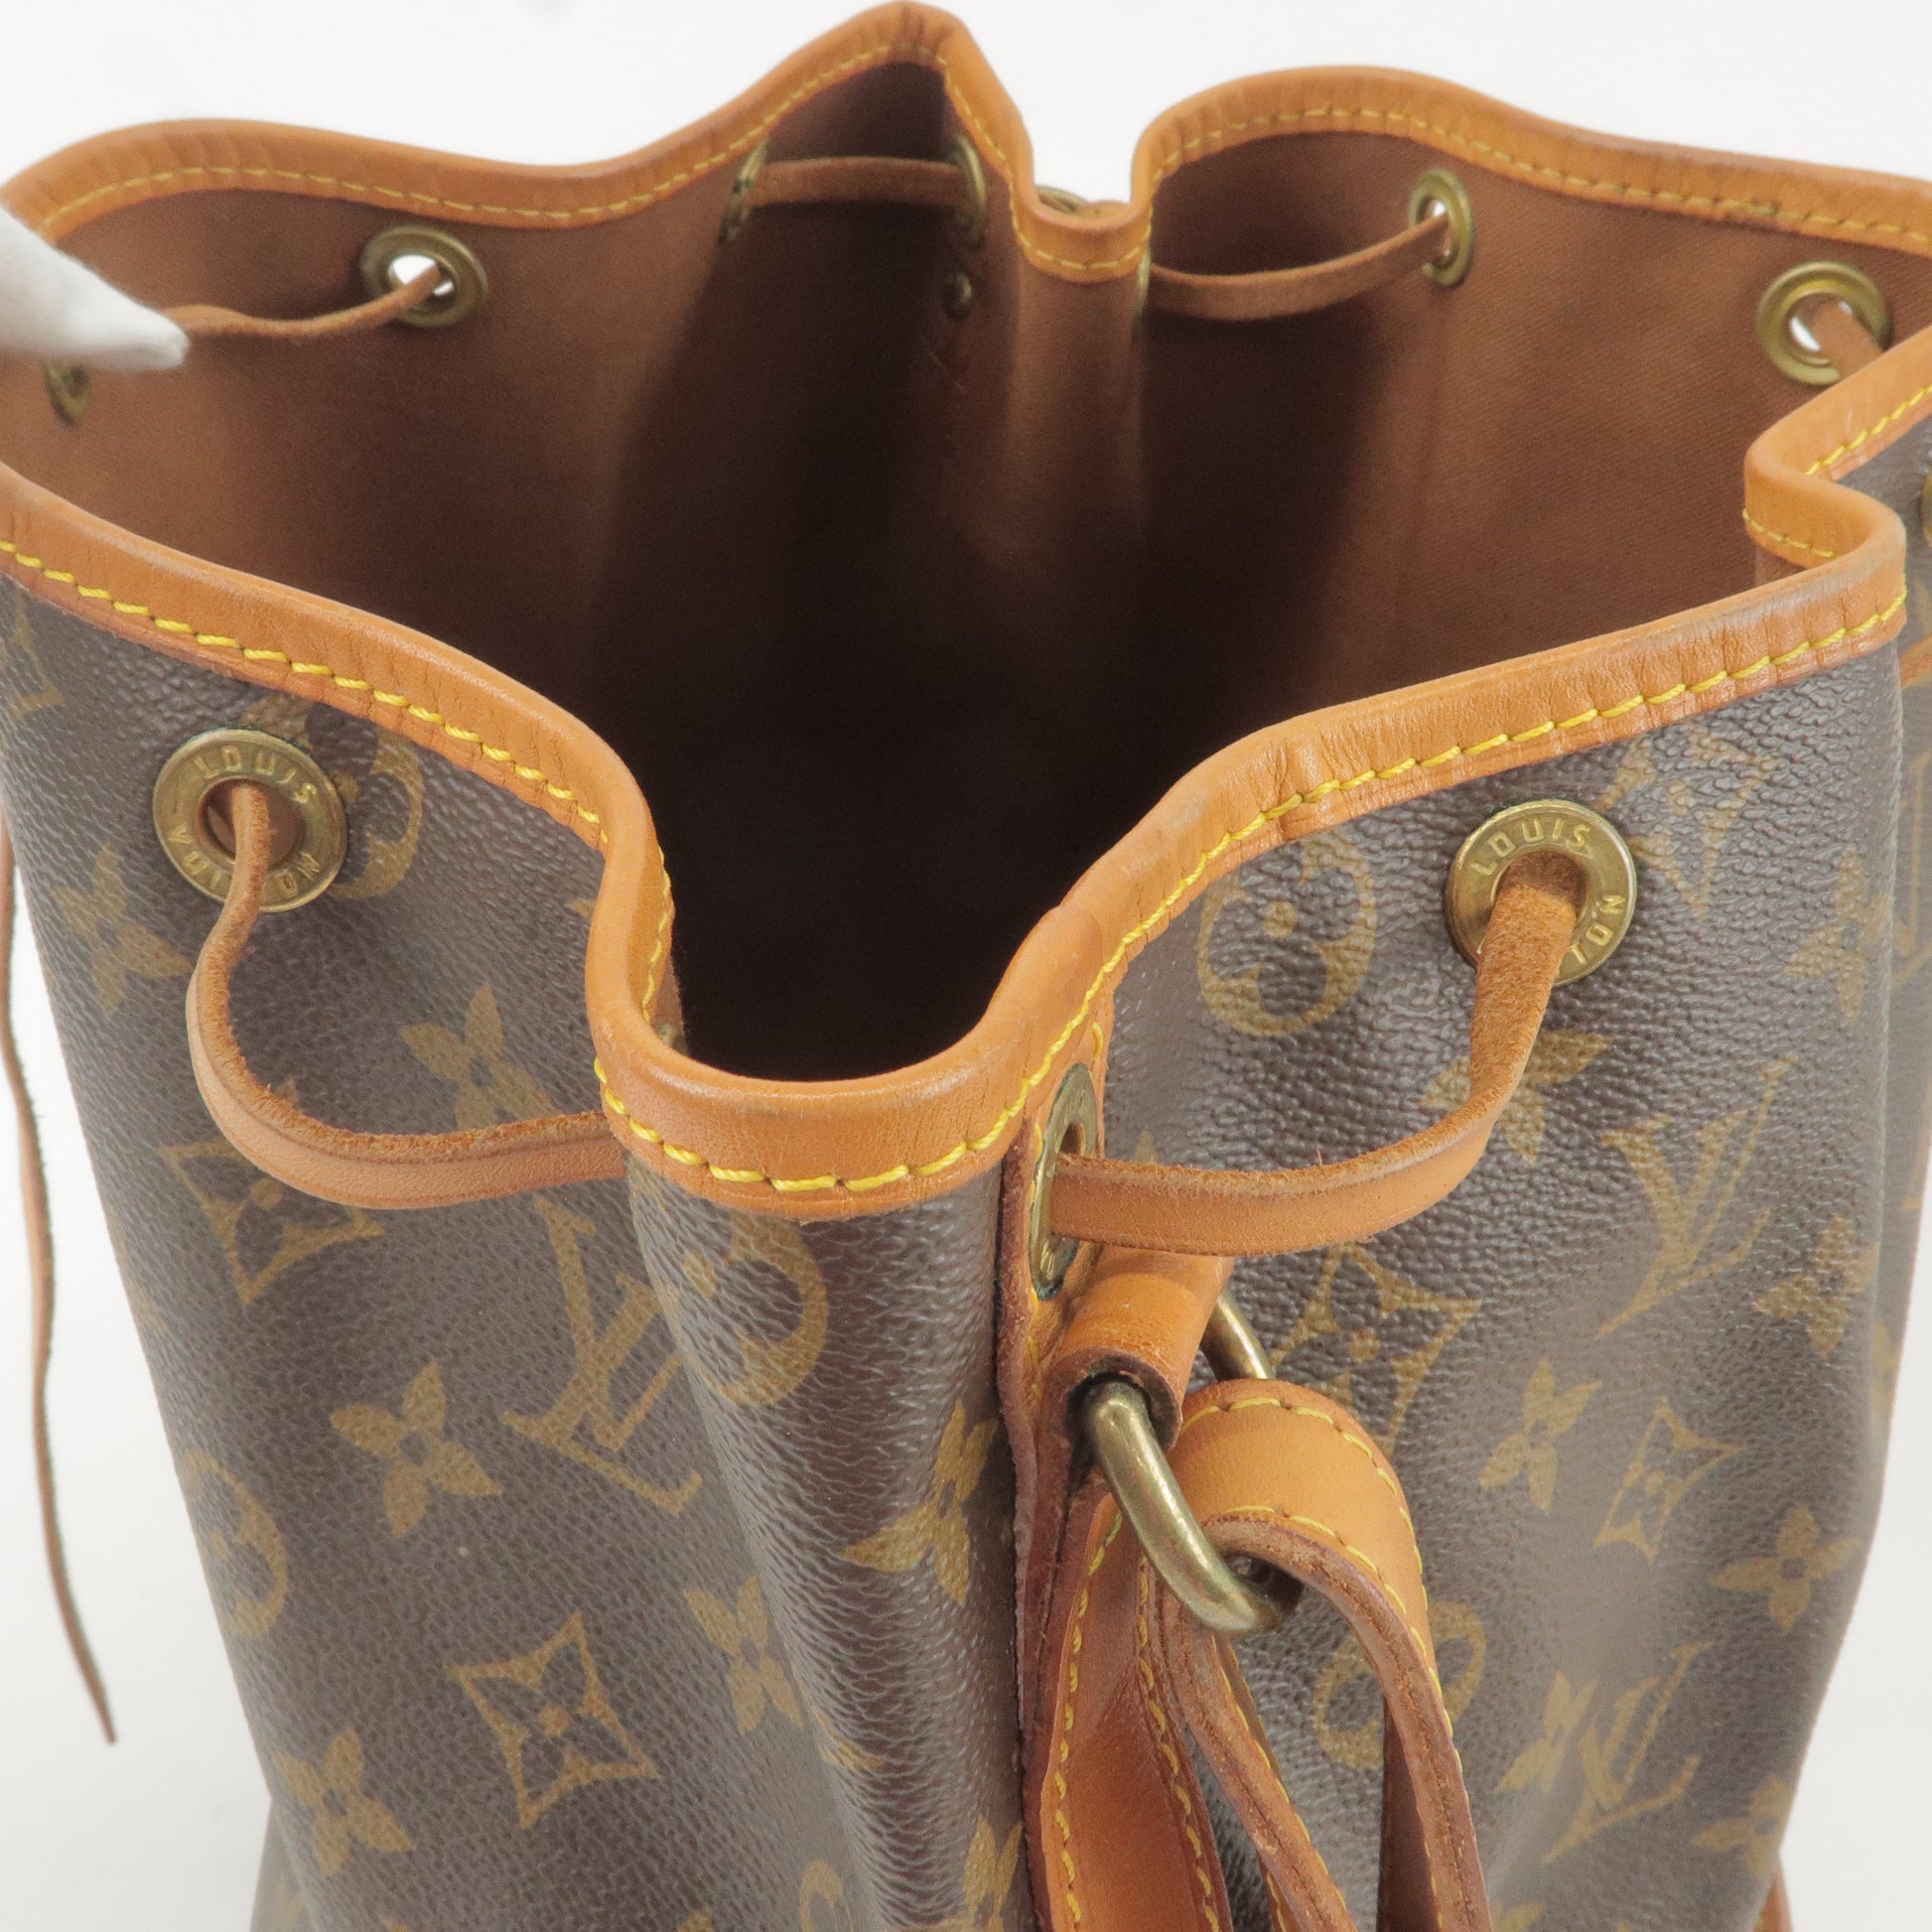 Hand - Shoulder - Bag - Bag - Vuitton - Noe - Looks Ethereal In